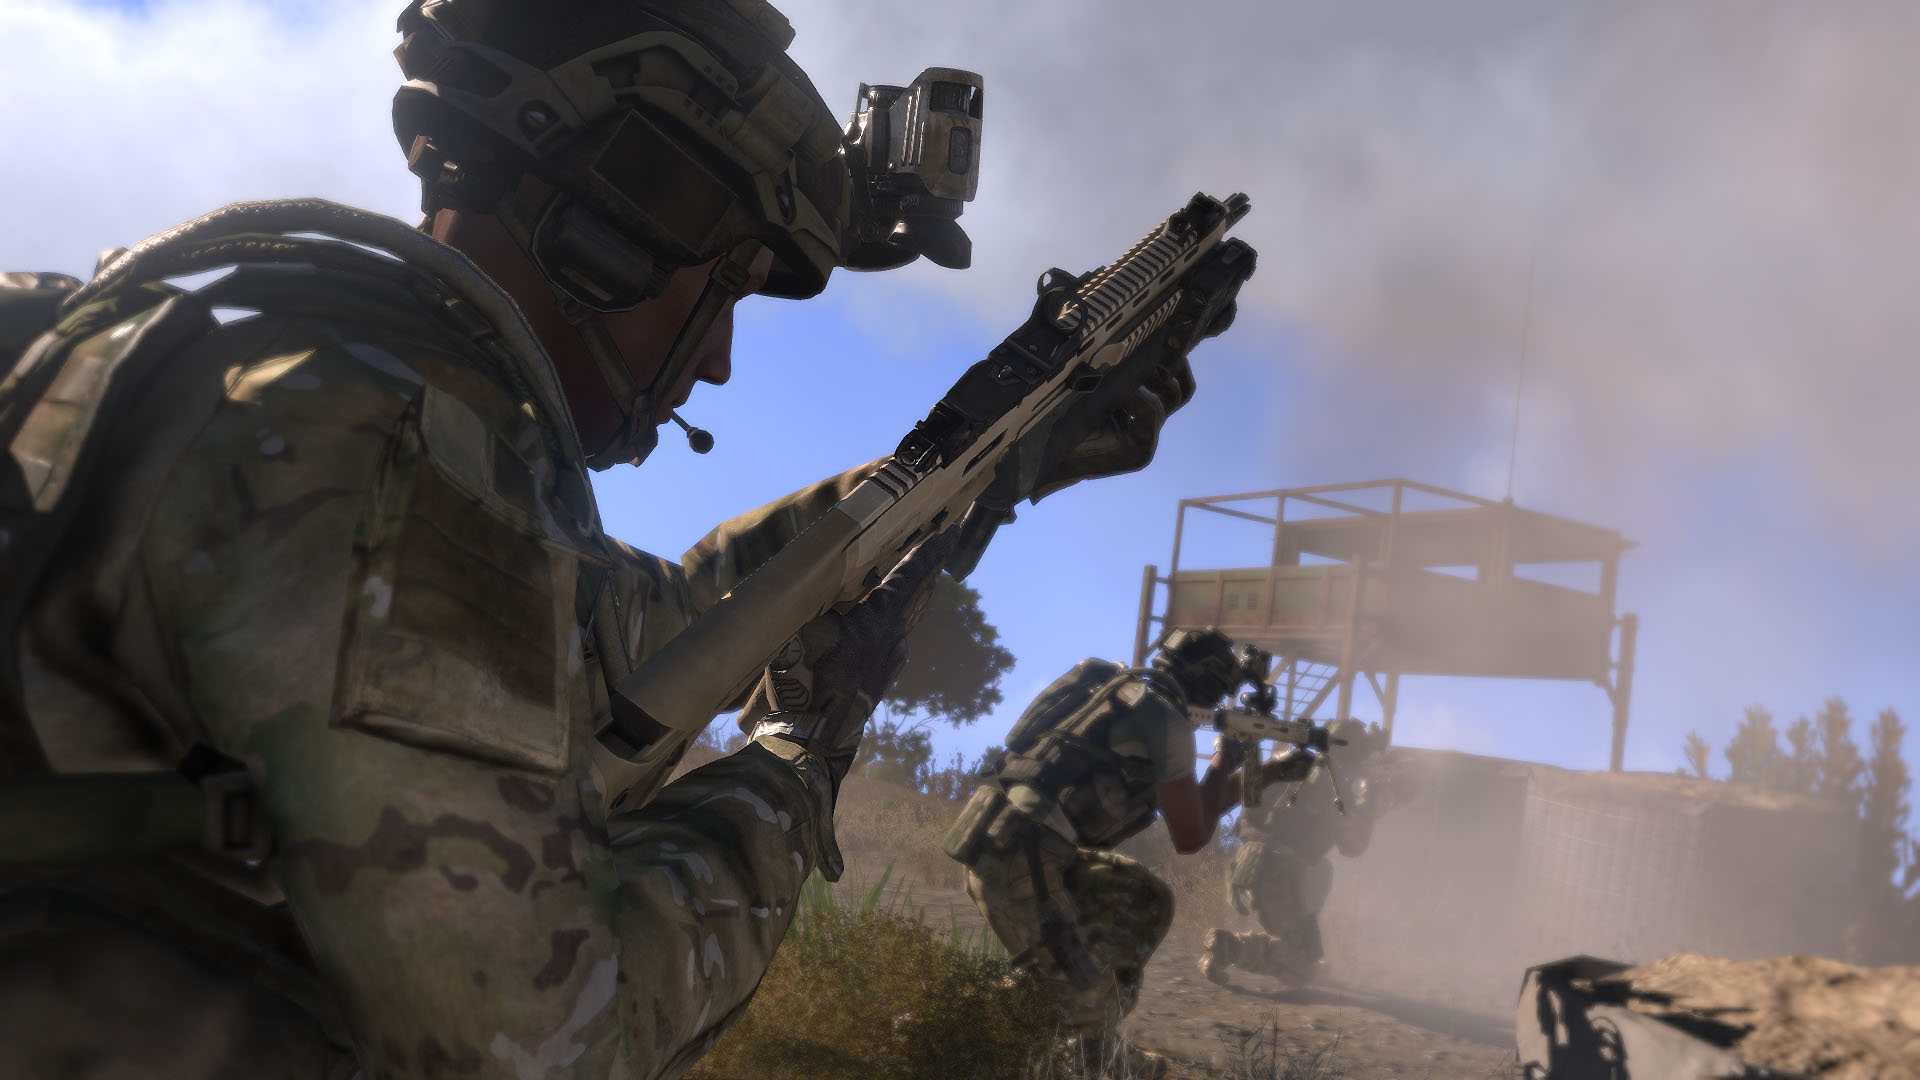 ArmA 3 - New Spectacular Screenshots